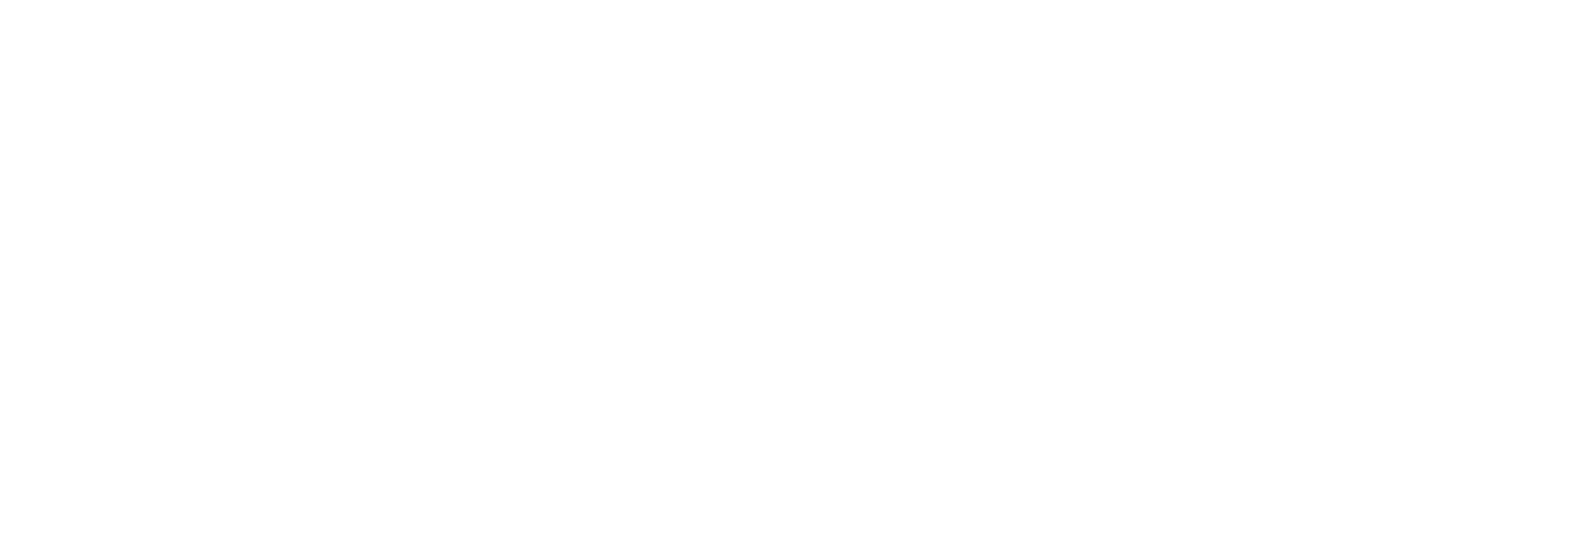 Zovio logo large for dark backgrounds (transparent PNG)